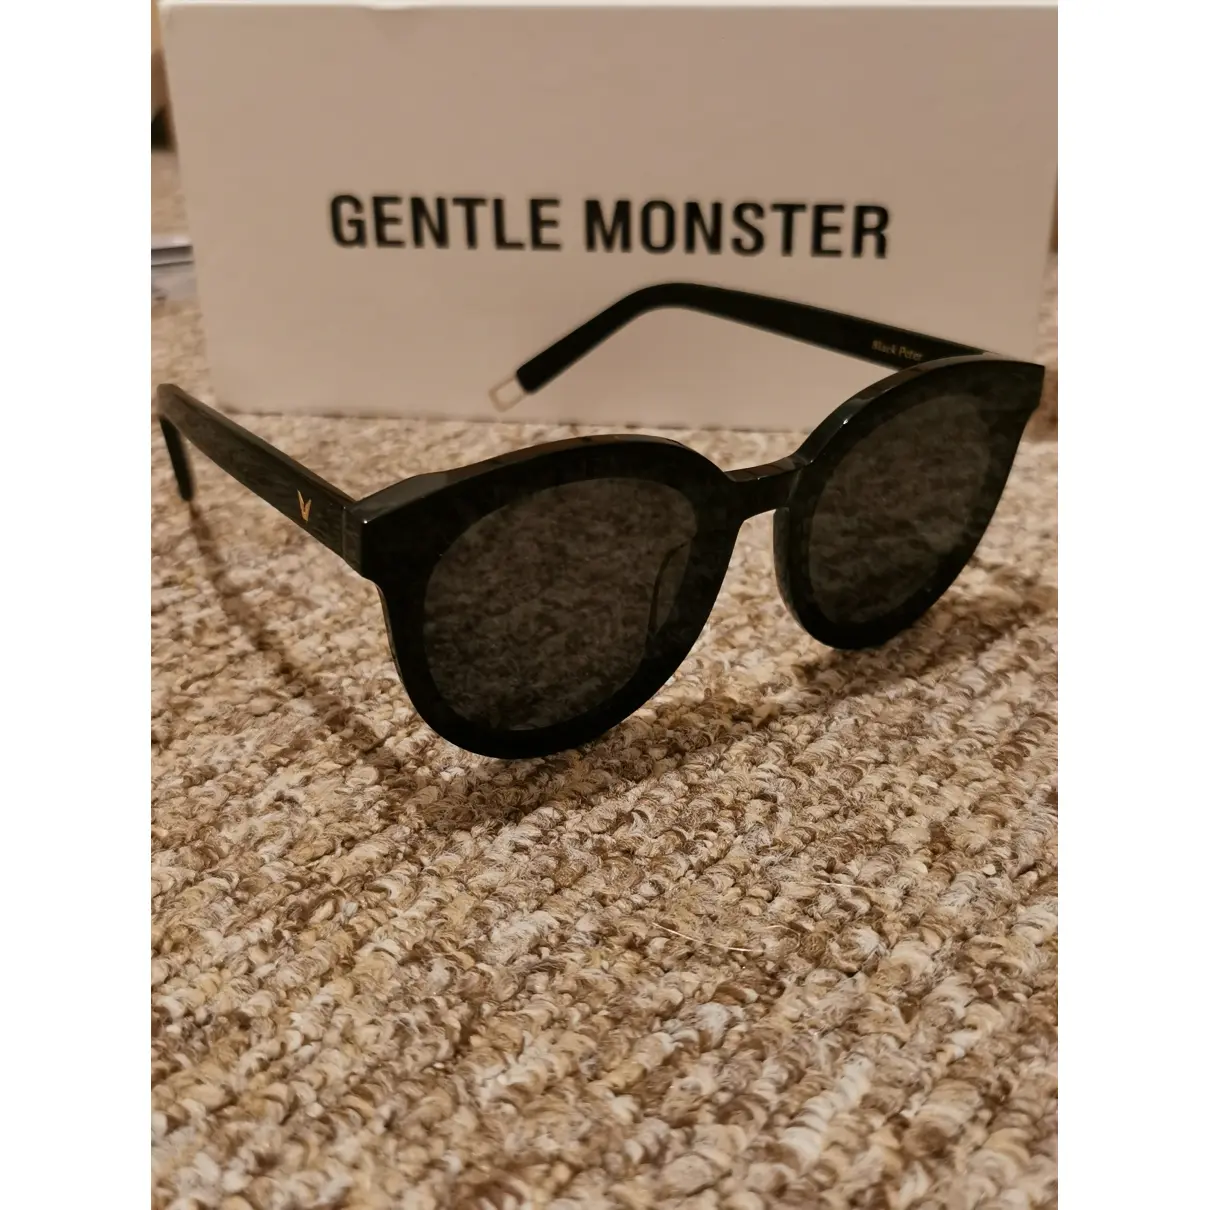 Buy Gentle Monster Oversized sunglasses online